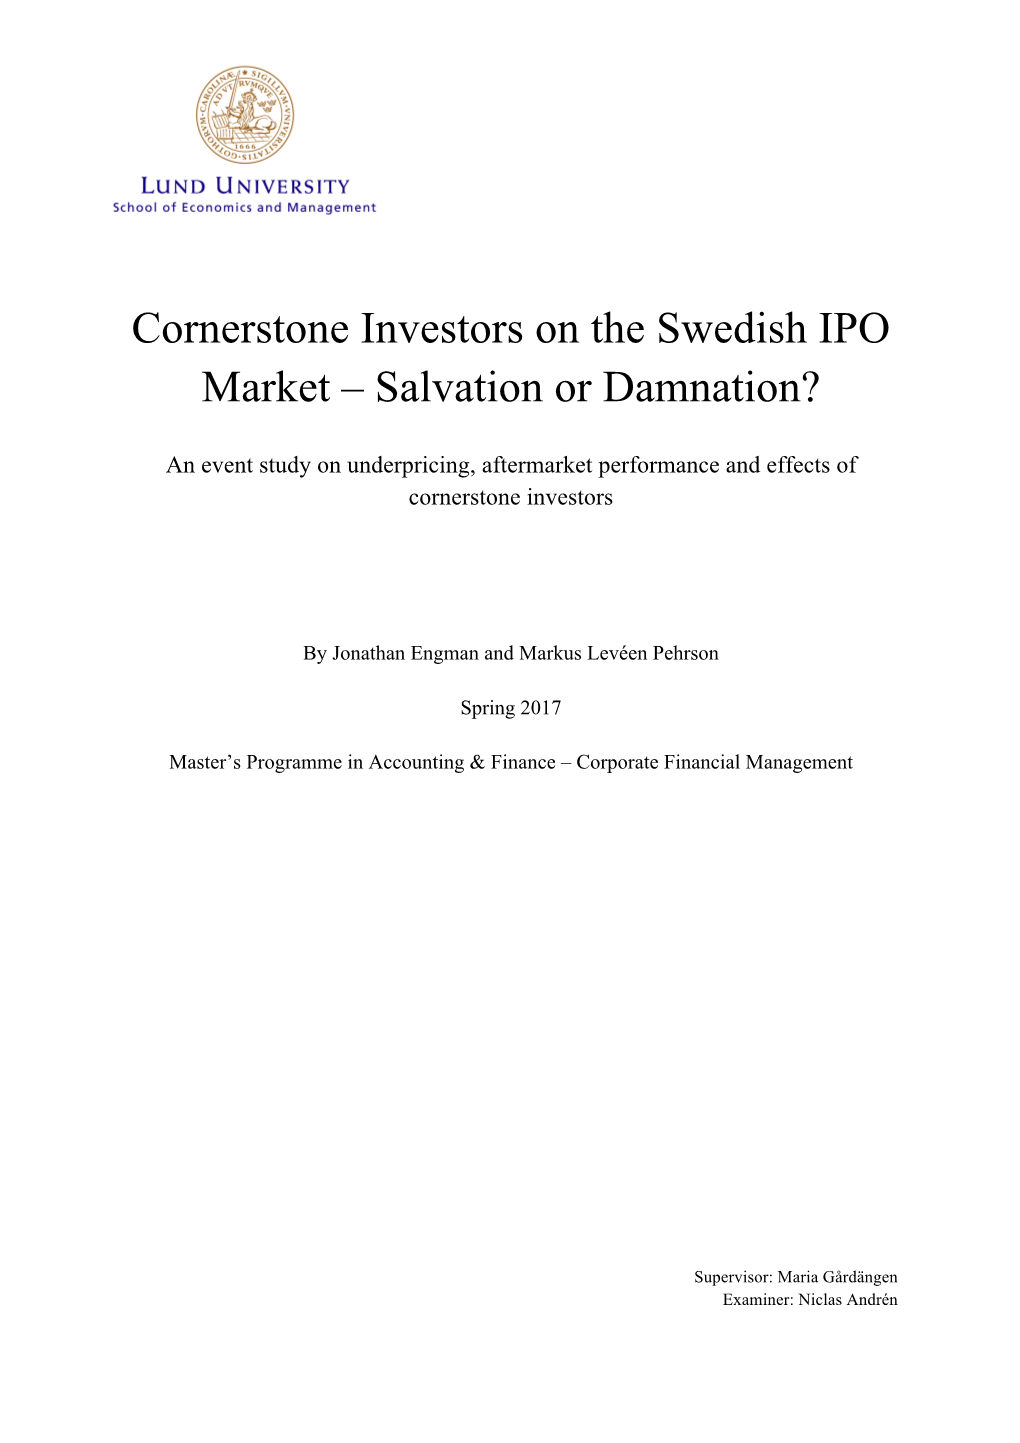 Cornerstone Investors on the Swedish IPO Market – Salvation Or Damnation?